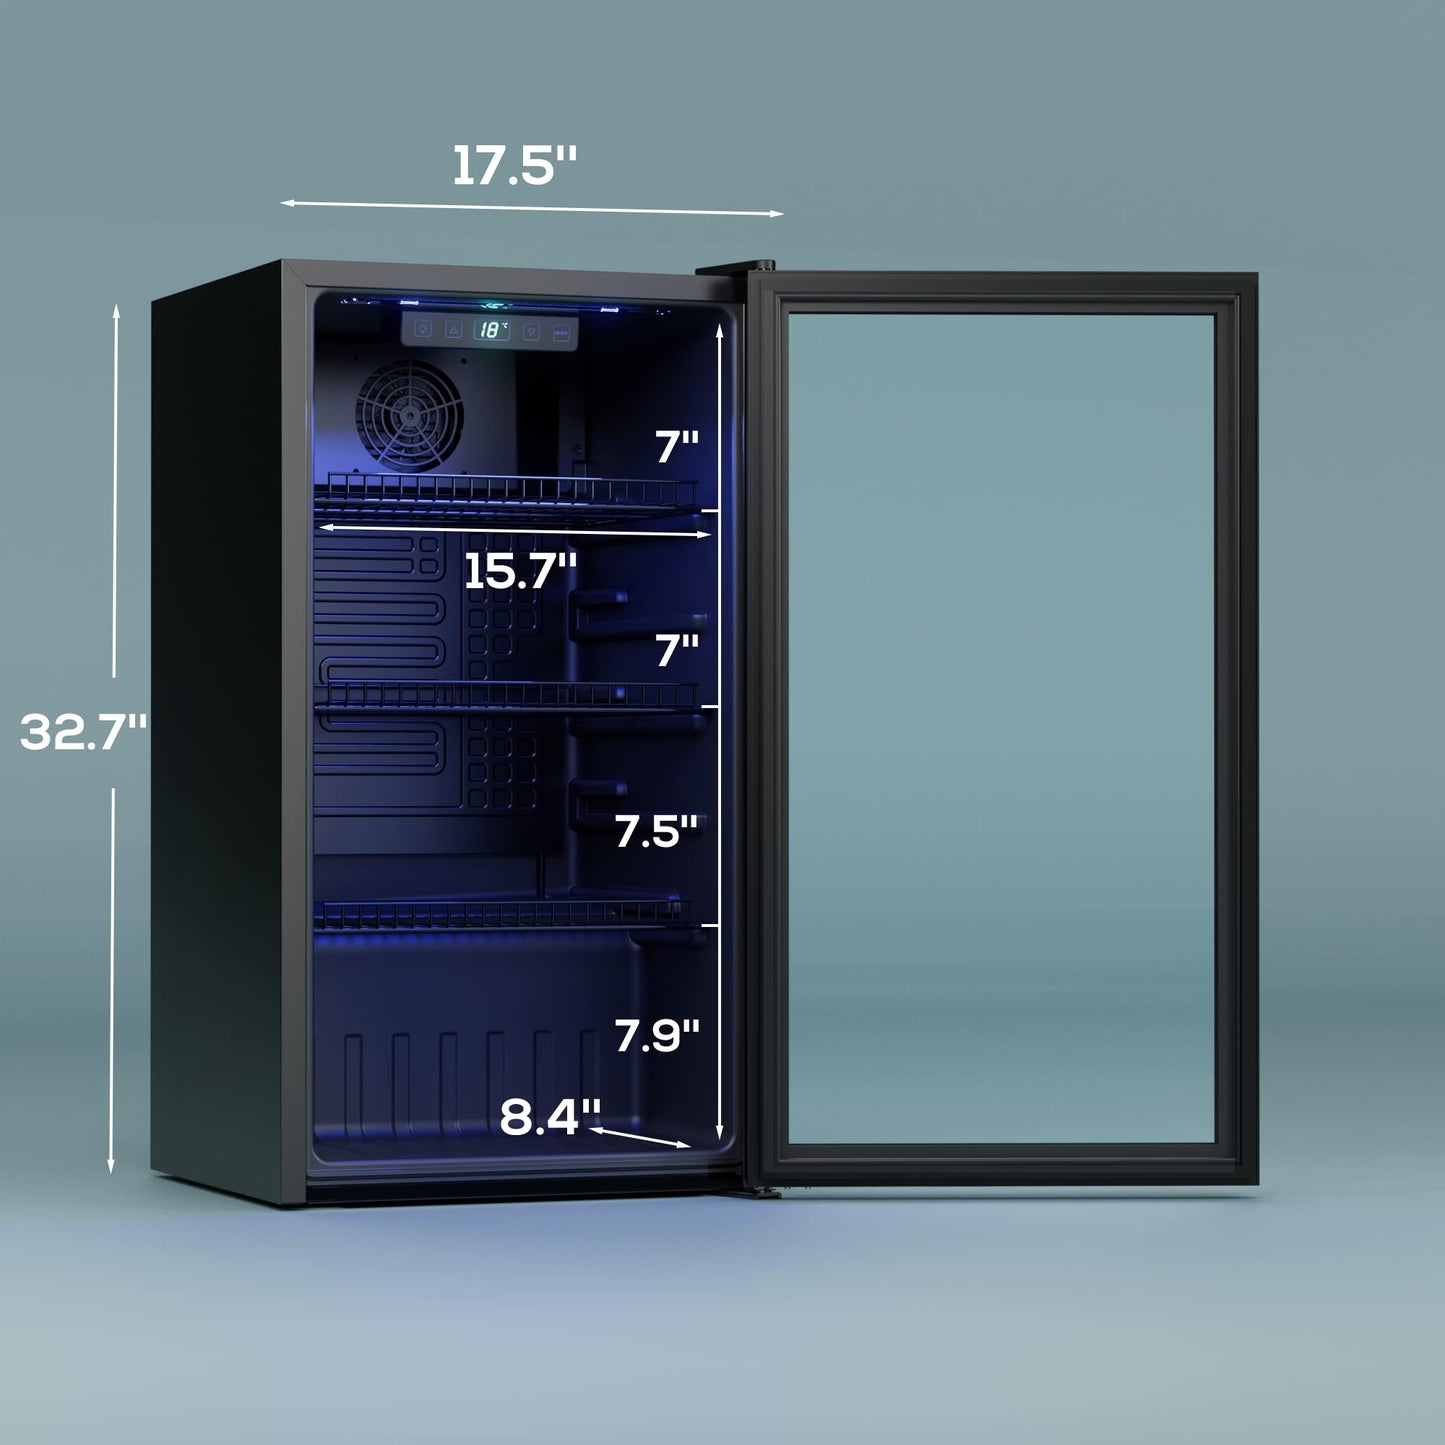 Manastin Beverage Refrigerator Cooler-120 Cans Freestanding Mini Fridge Cooler with Glass Door, Adjustable Shelves & Digital Temperature Display for Soda, Wine or Beer (Black, 3.2 Cu.Ft)